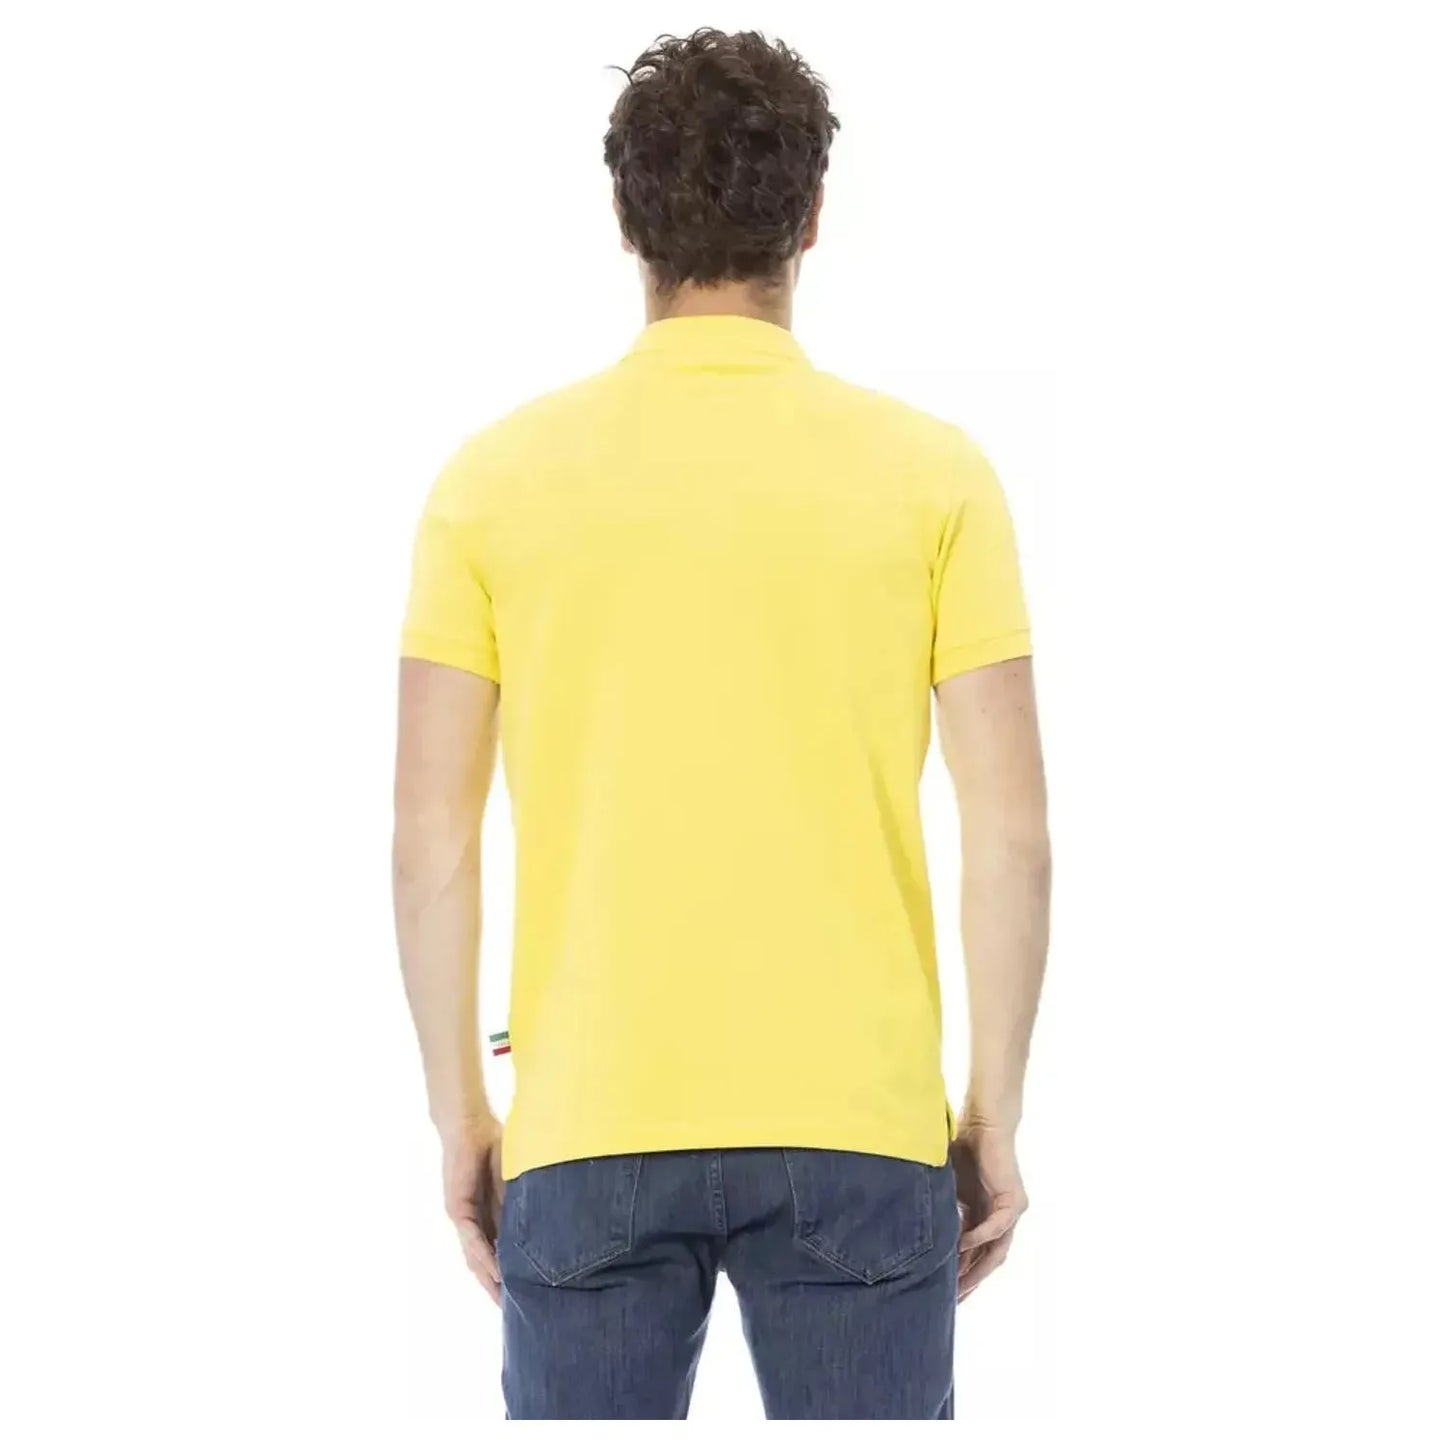 Baldinini Trend Sunshine Yellow Cotton Polo with Chic Embroidery yellow-cotton-polo-shirt-5